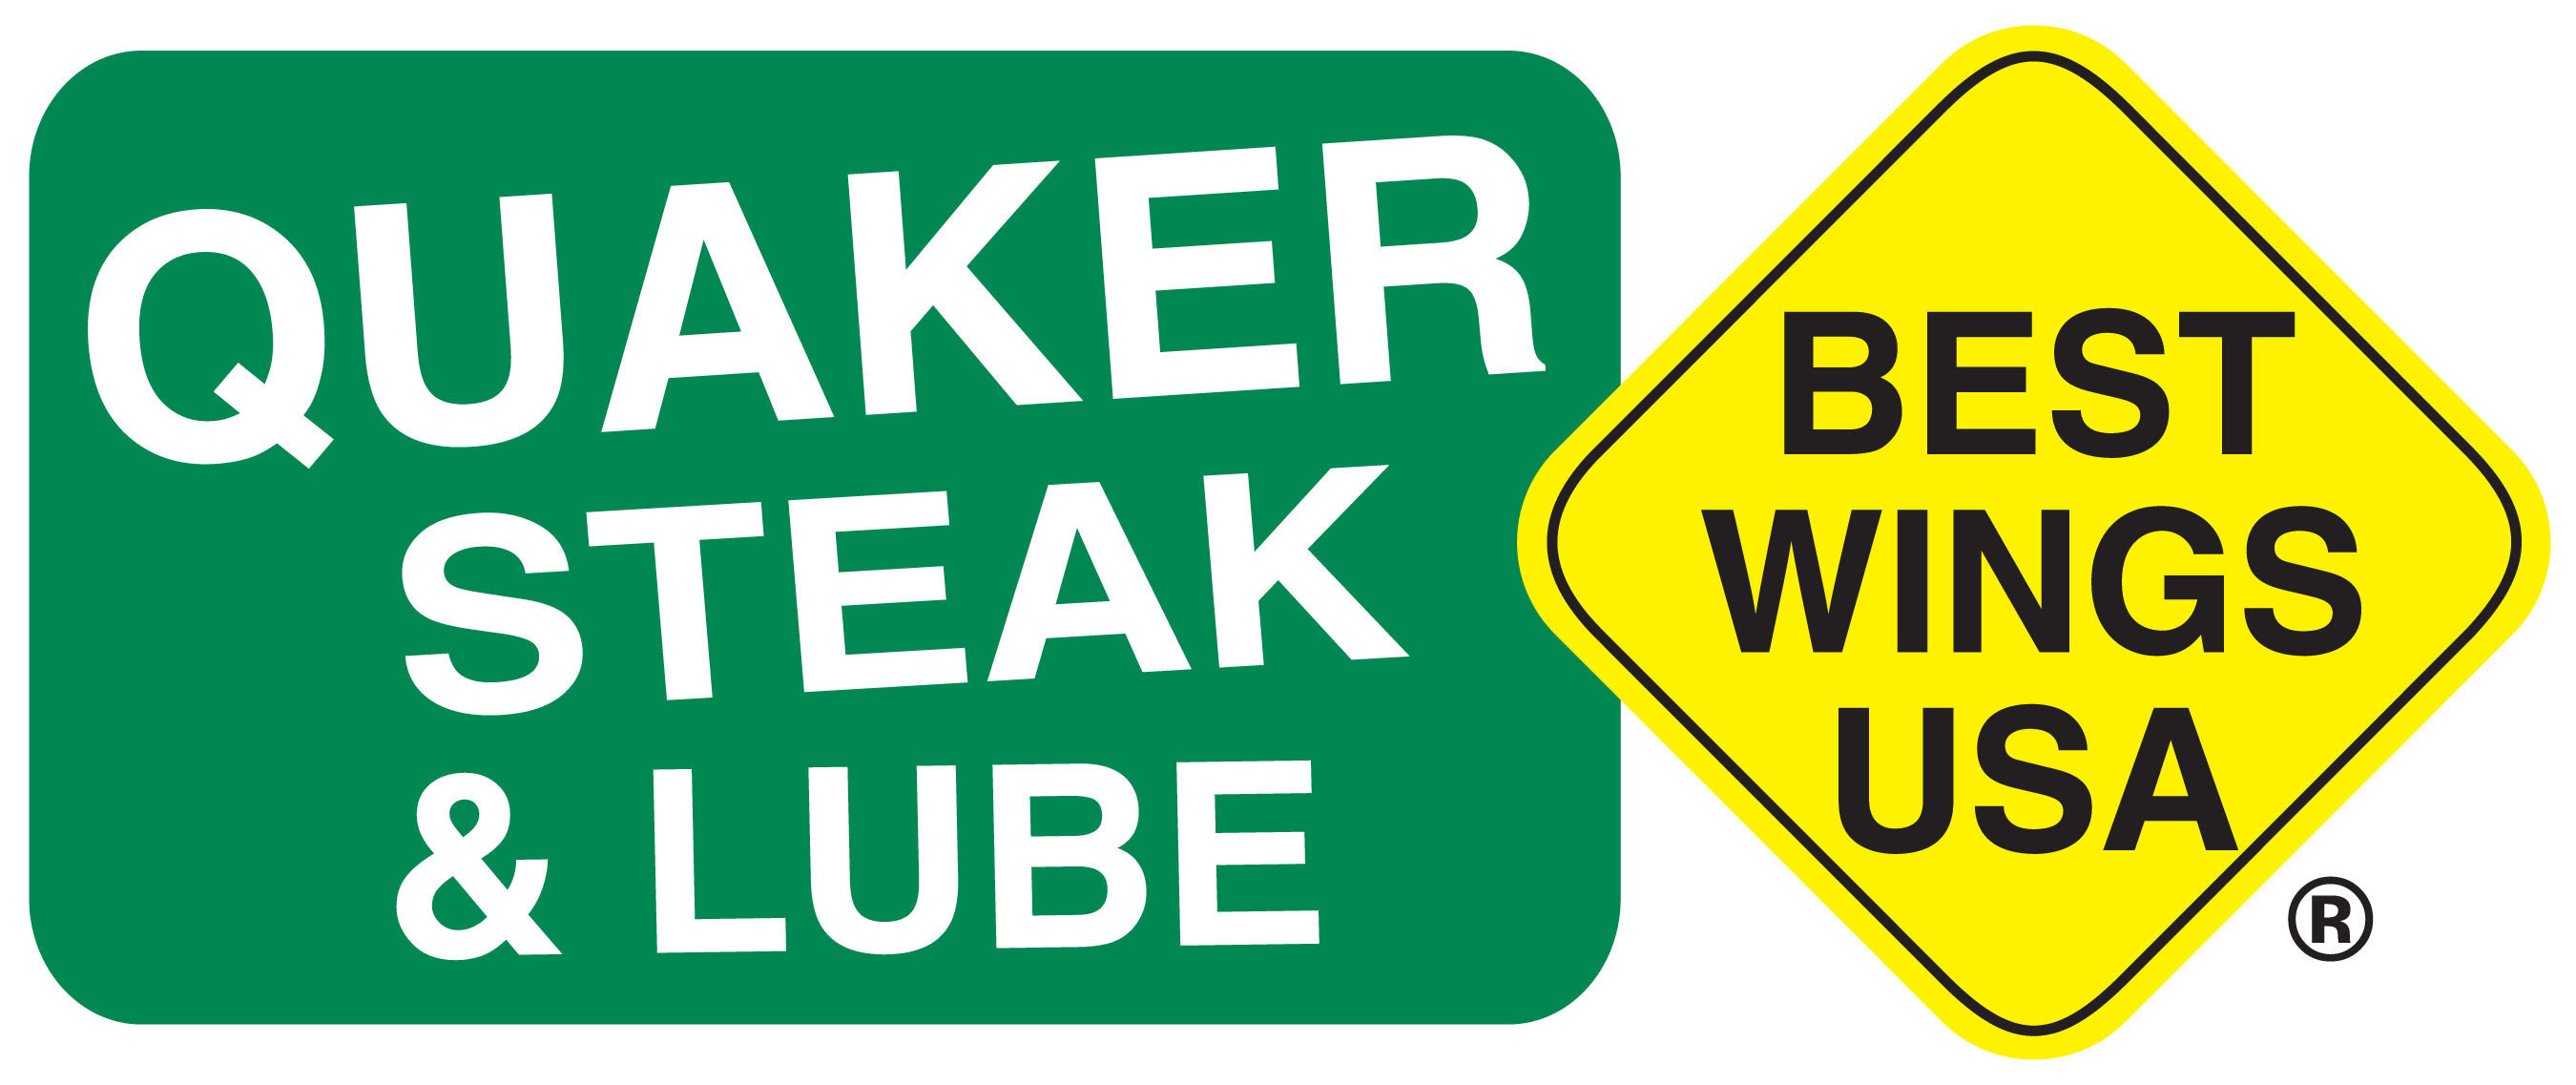 Quaker Steak & Lube company logo.